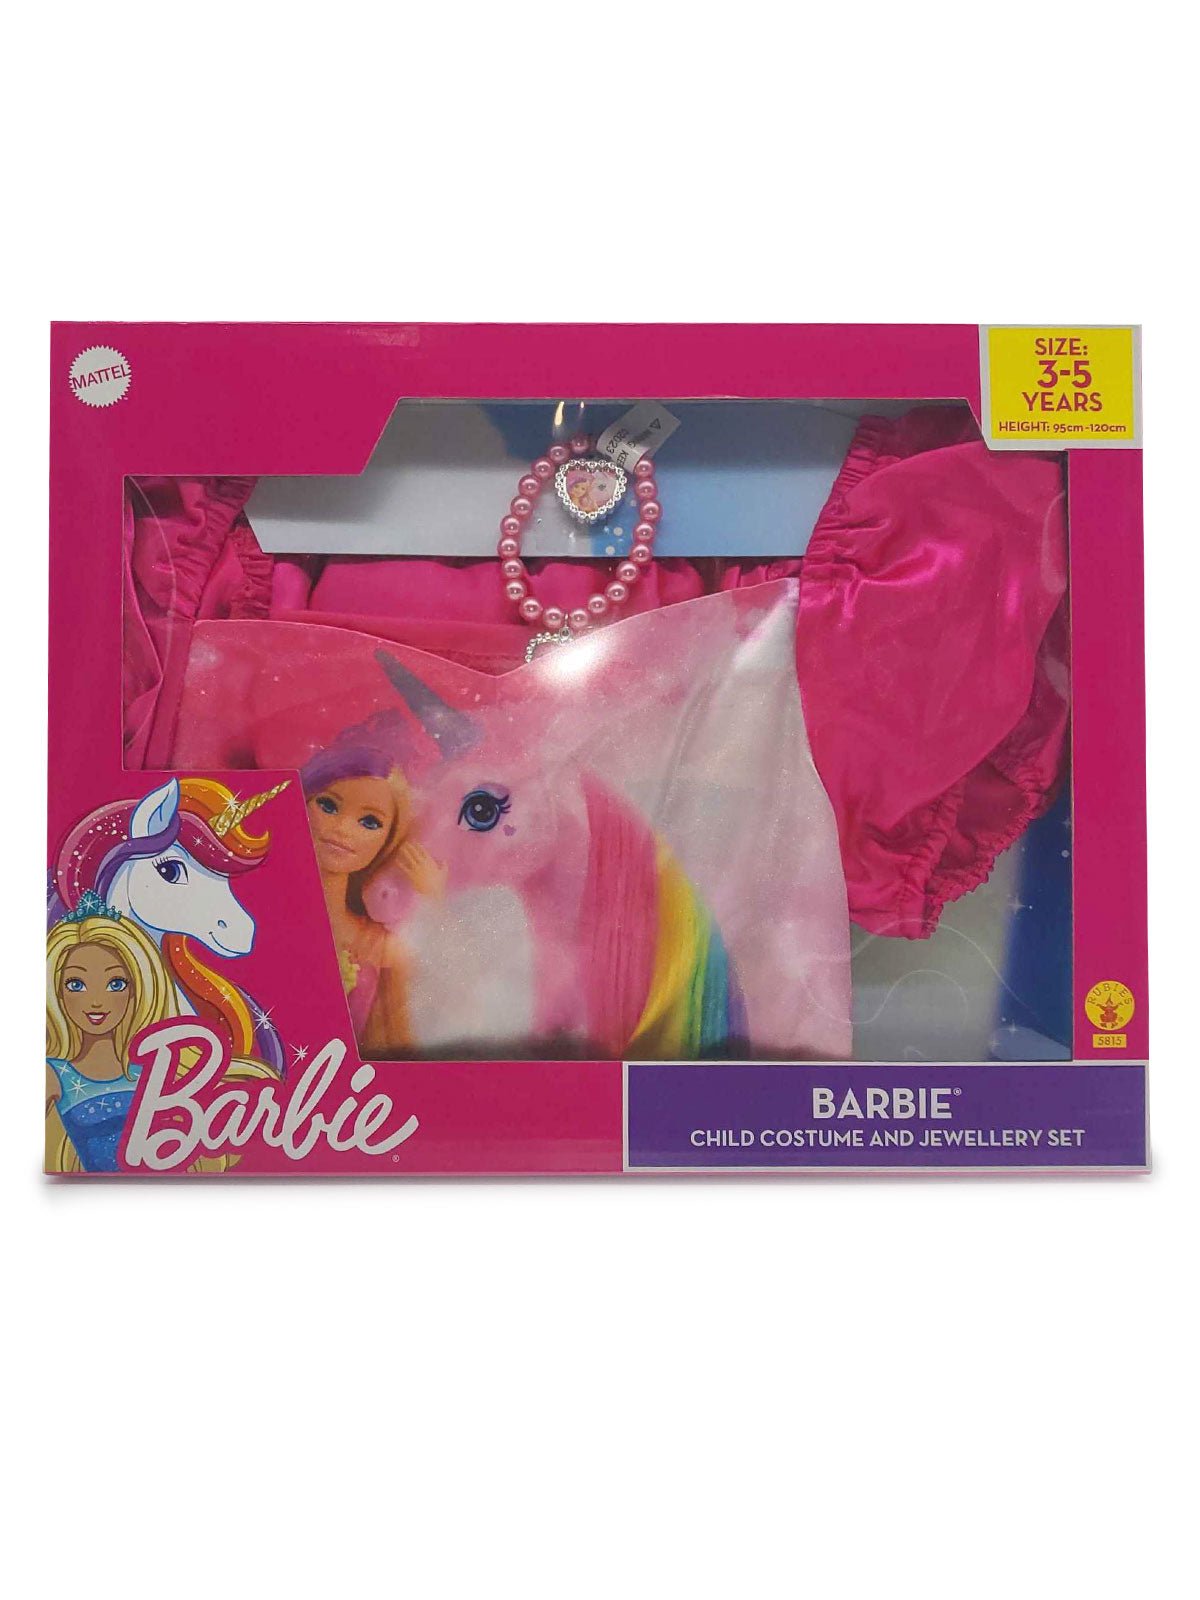 Barbie Costume Box Set - Size 3-5 Yrs